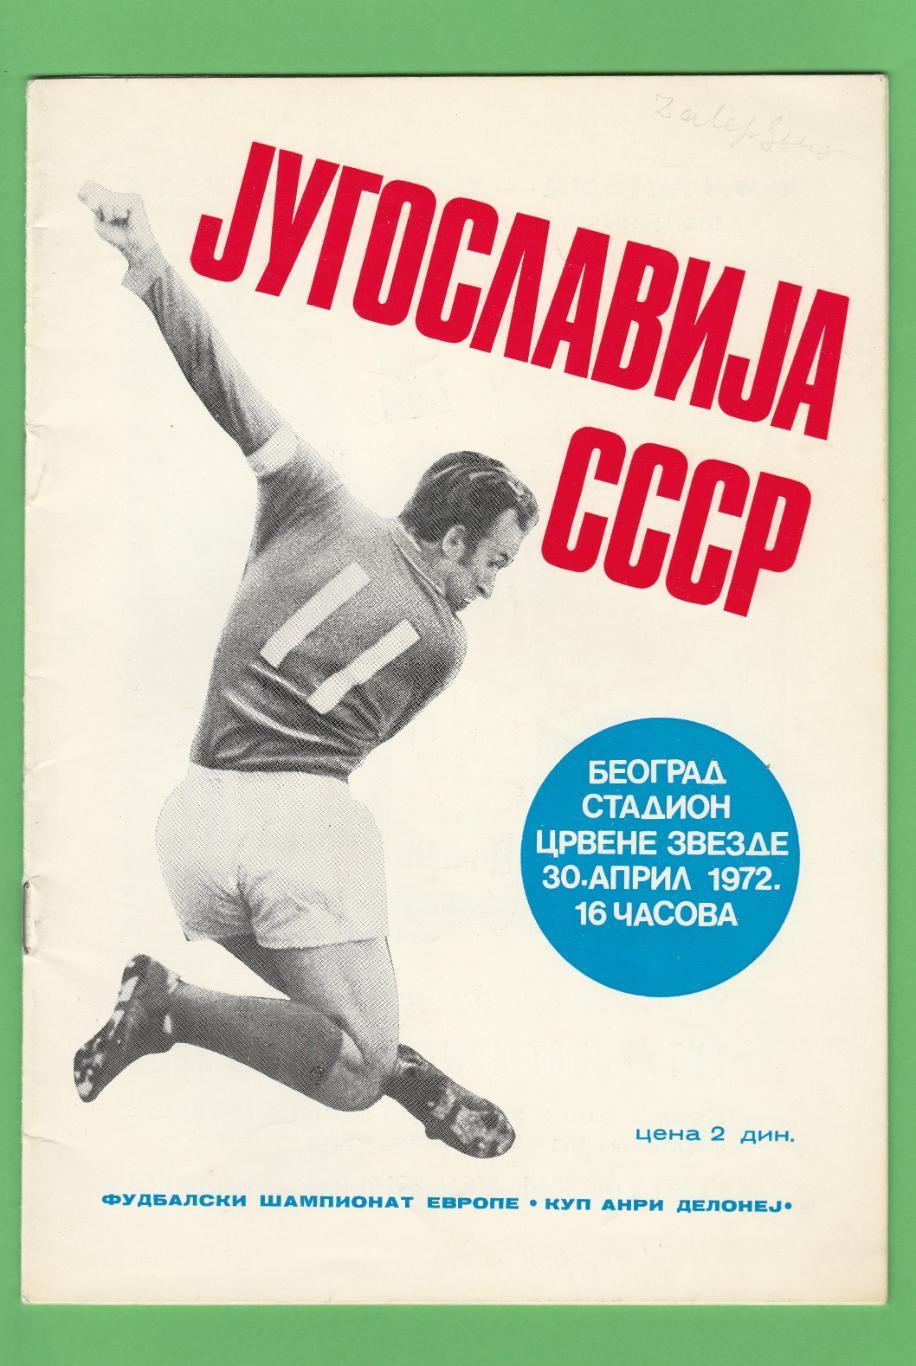 Югославия - СССР 30.04.1972. программа